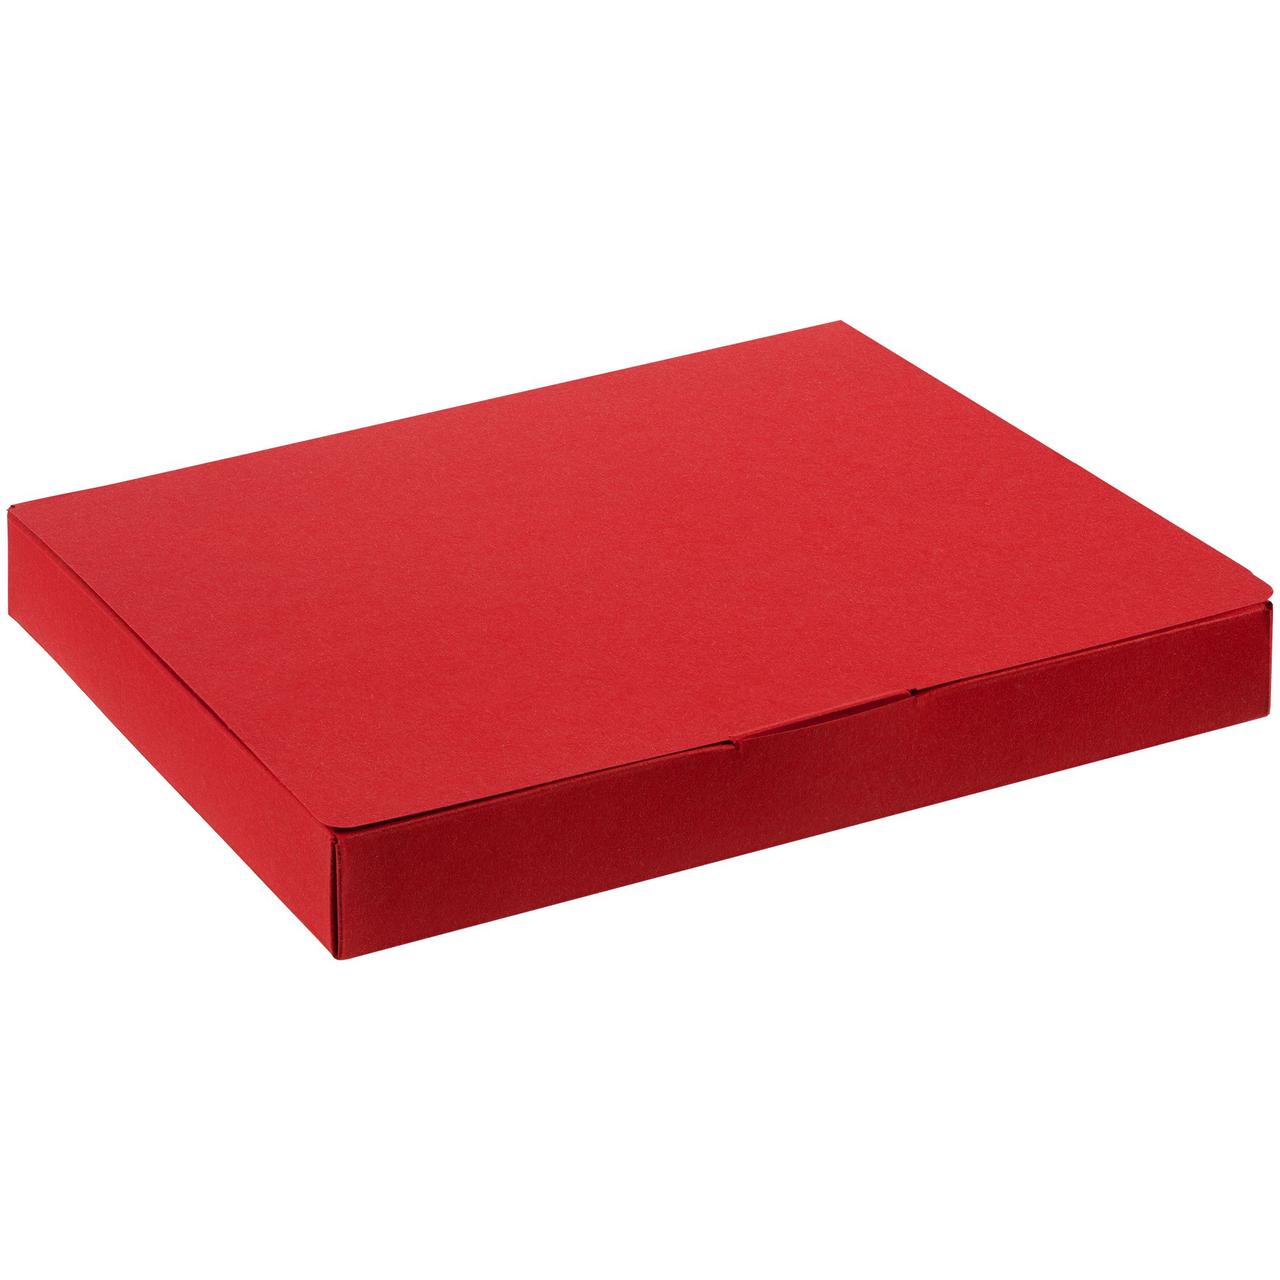 Коробка самосборная Flacky Slim, красная (артикул 12207.50), фото 1